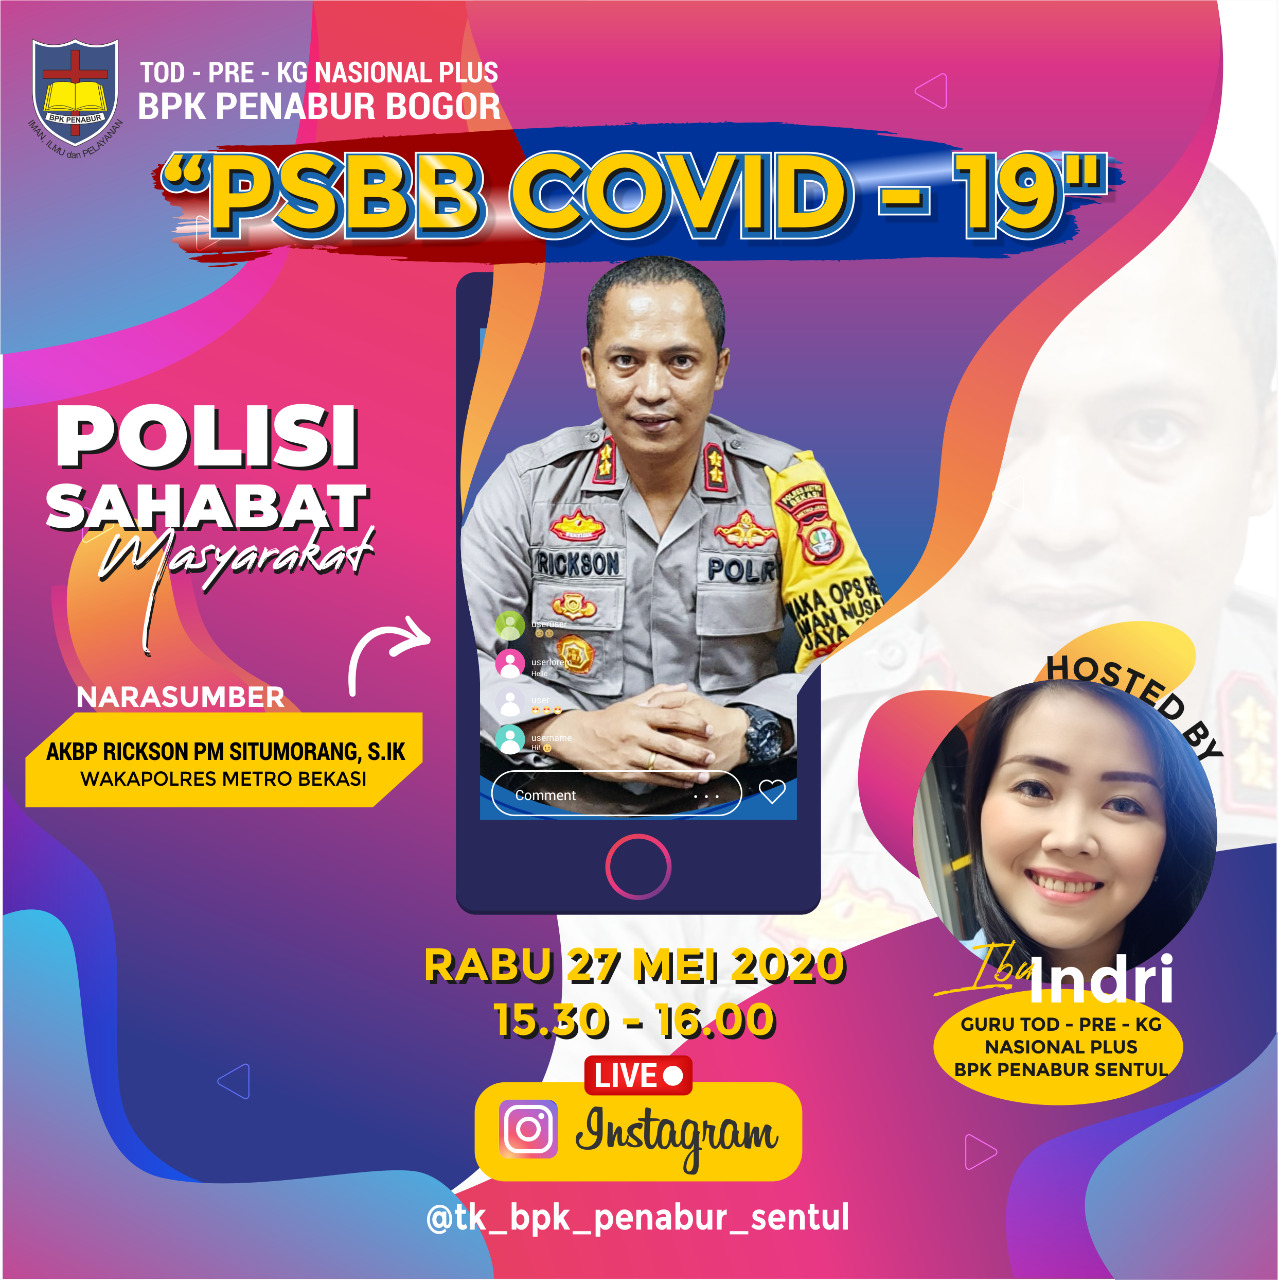 Instagram Live "PSBB Covid-19"